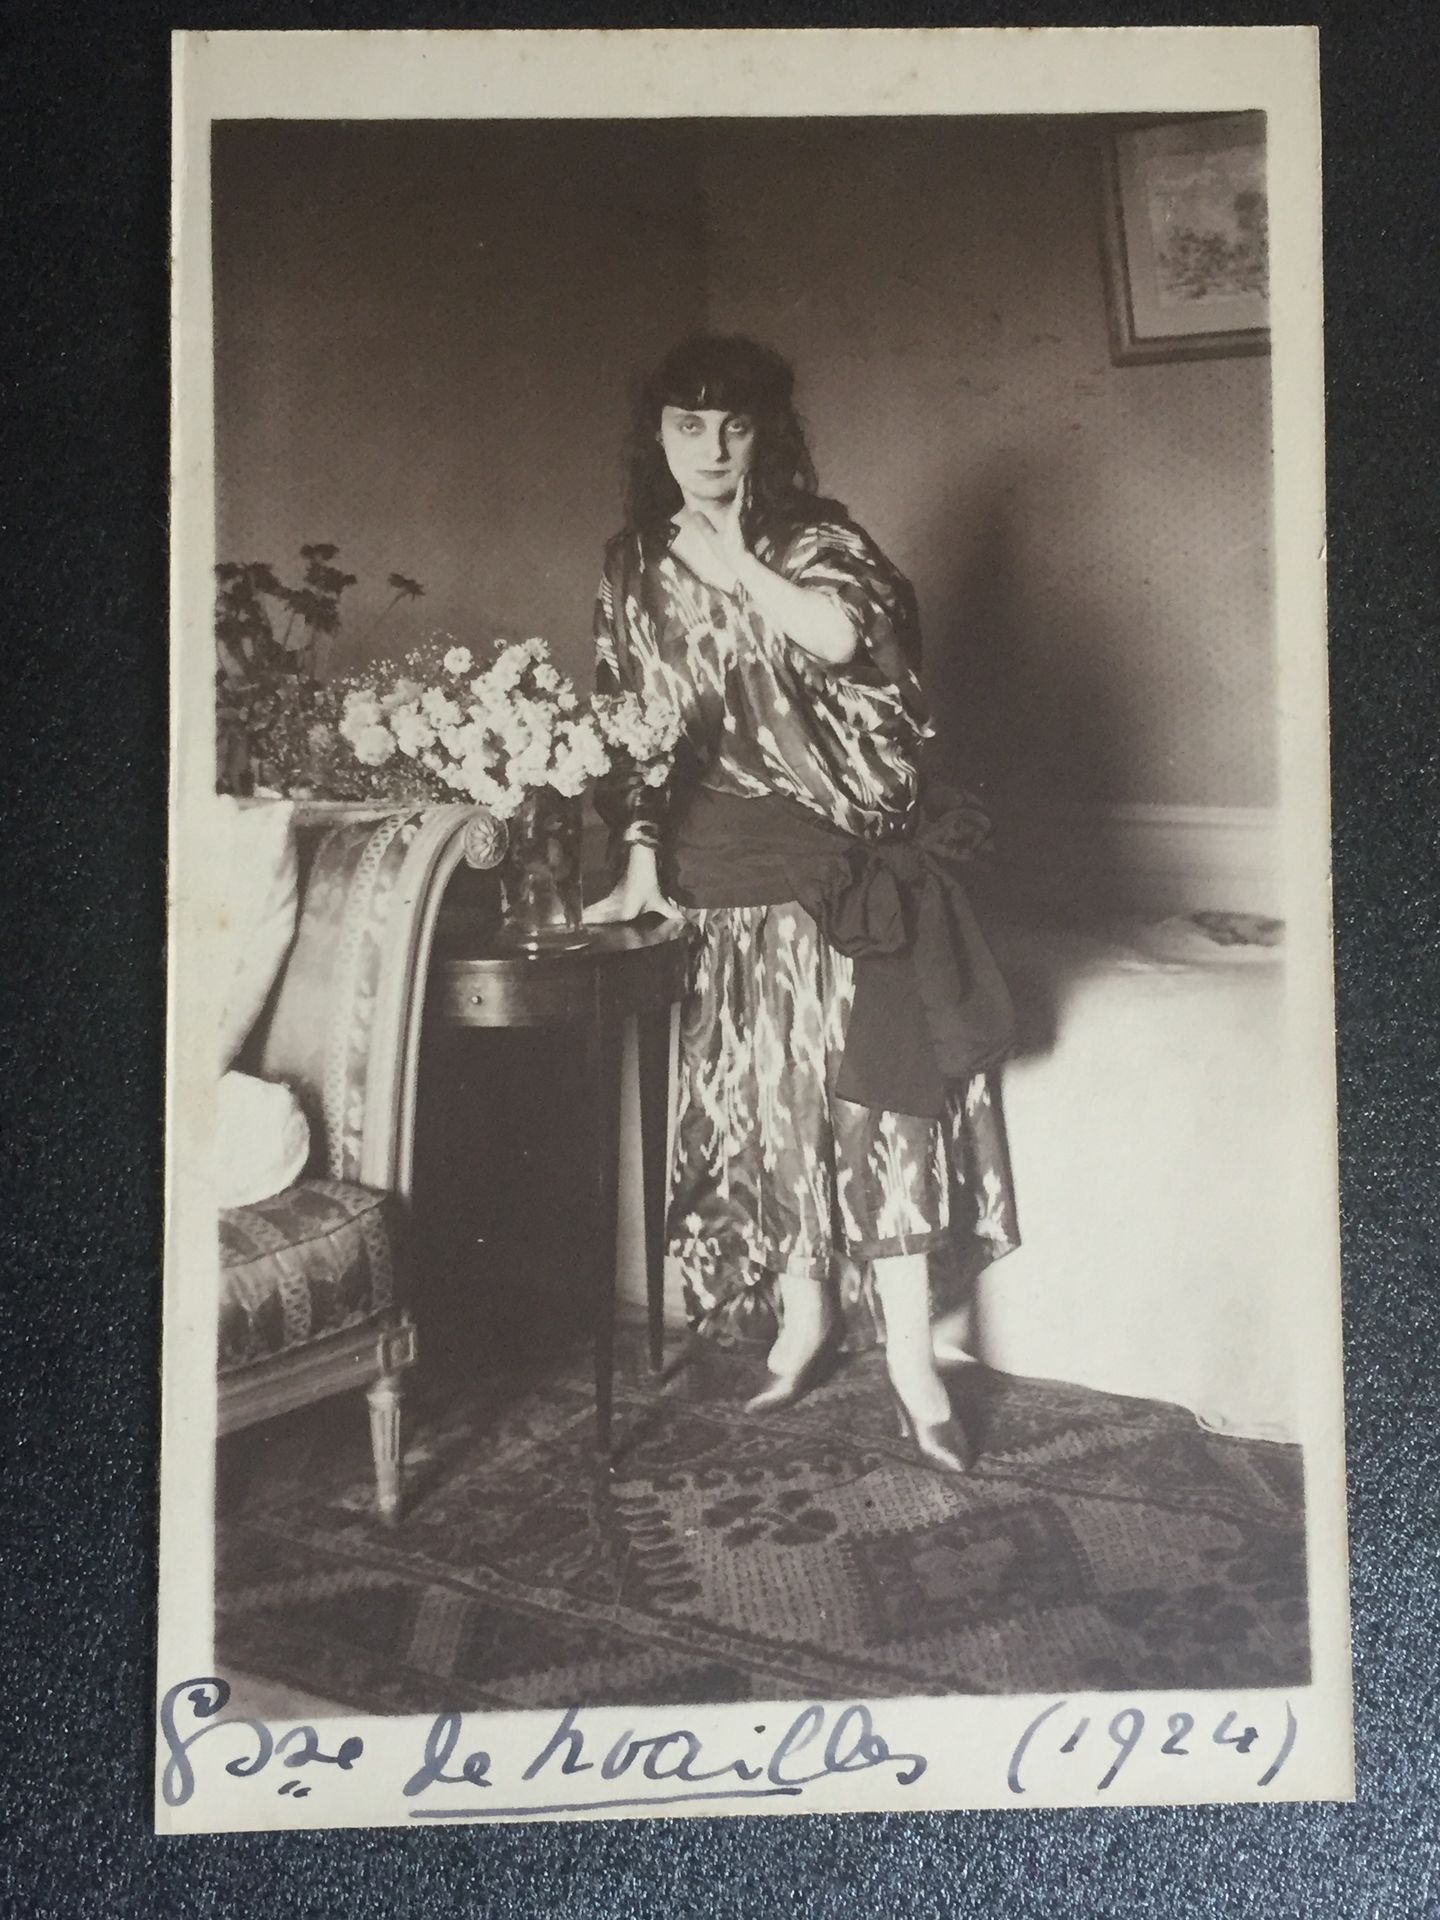 Null 安娜-德-诺艾利斯：由安娜-德-诺艾利斯签名的原始照片，上面有她的手写日期 "1924"。尺寸为17 x 11厘米。